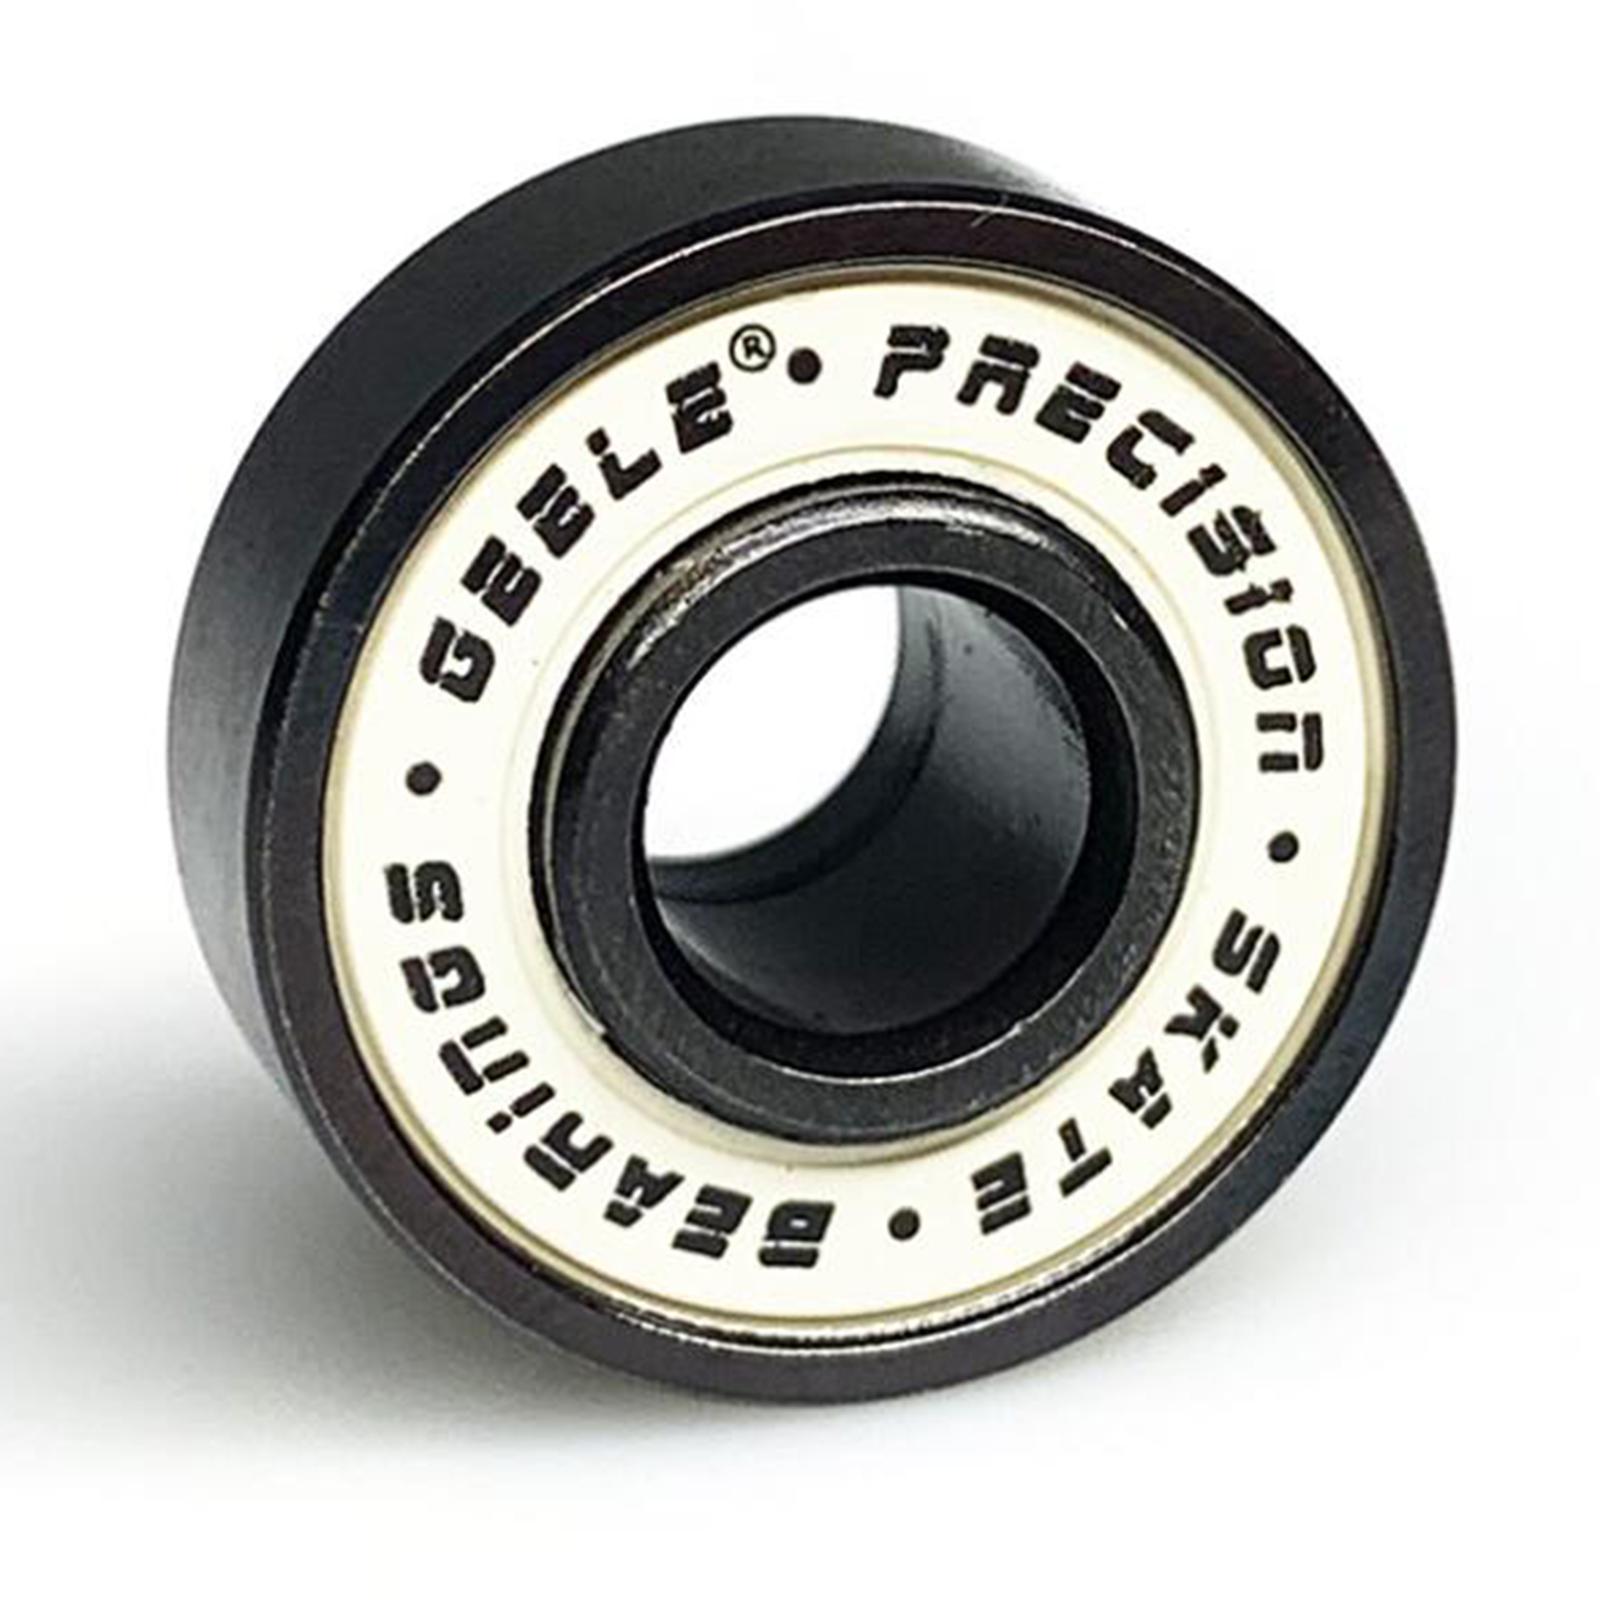 8pcs Premium Skateboard Bearings, Pro Longboard Bearings, 608, ABEC-11 Double Shields Wheel Bearing Replacement